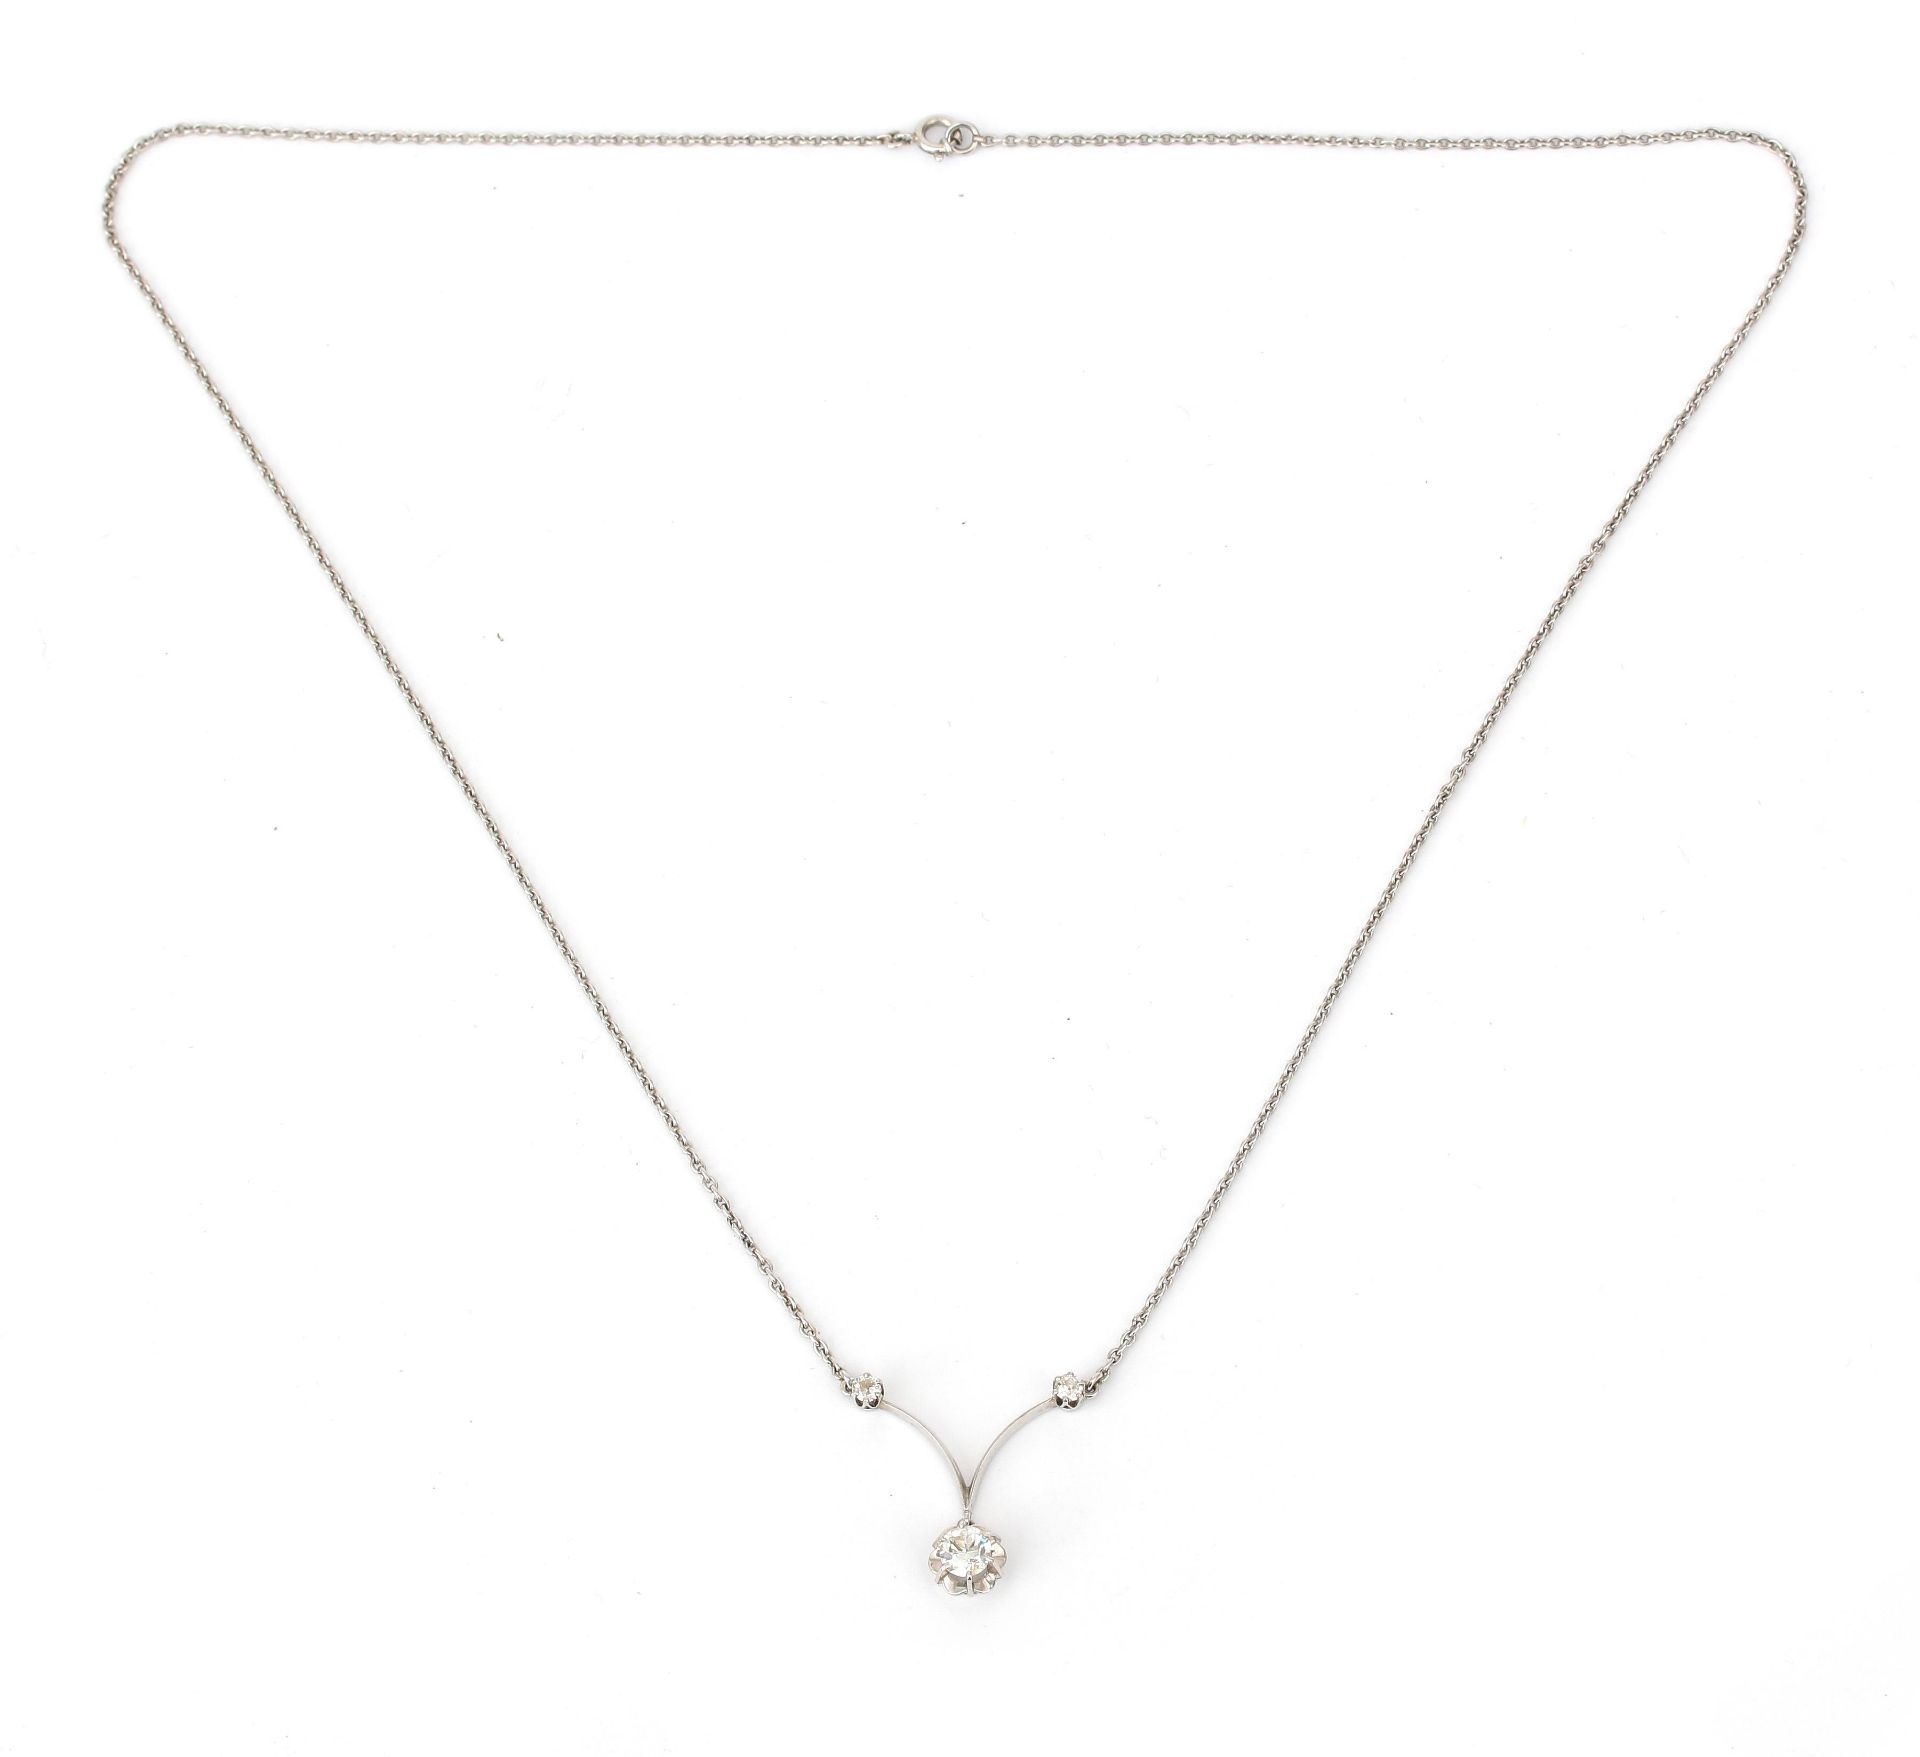 A 14 karat white gold diamond necklace, ca. 1960 - Image 2 of 2